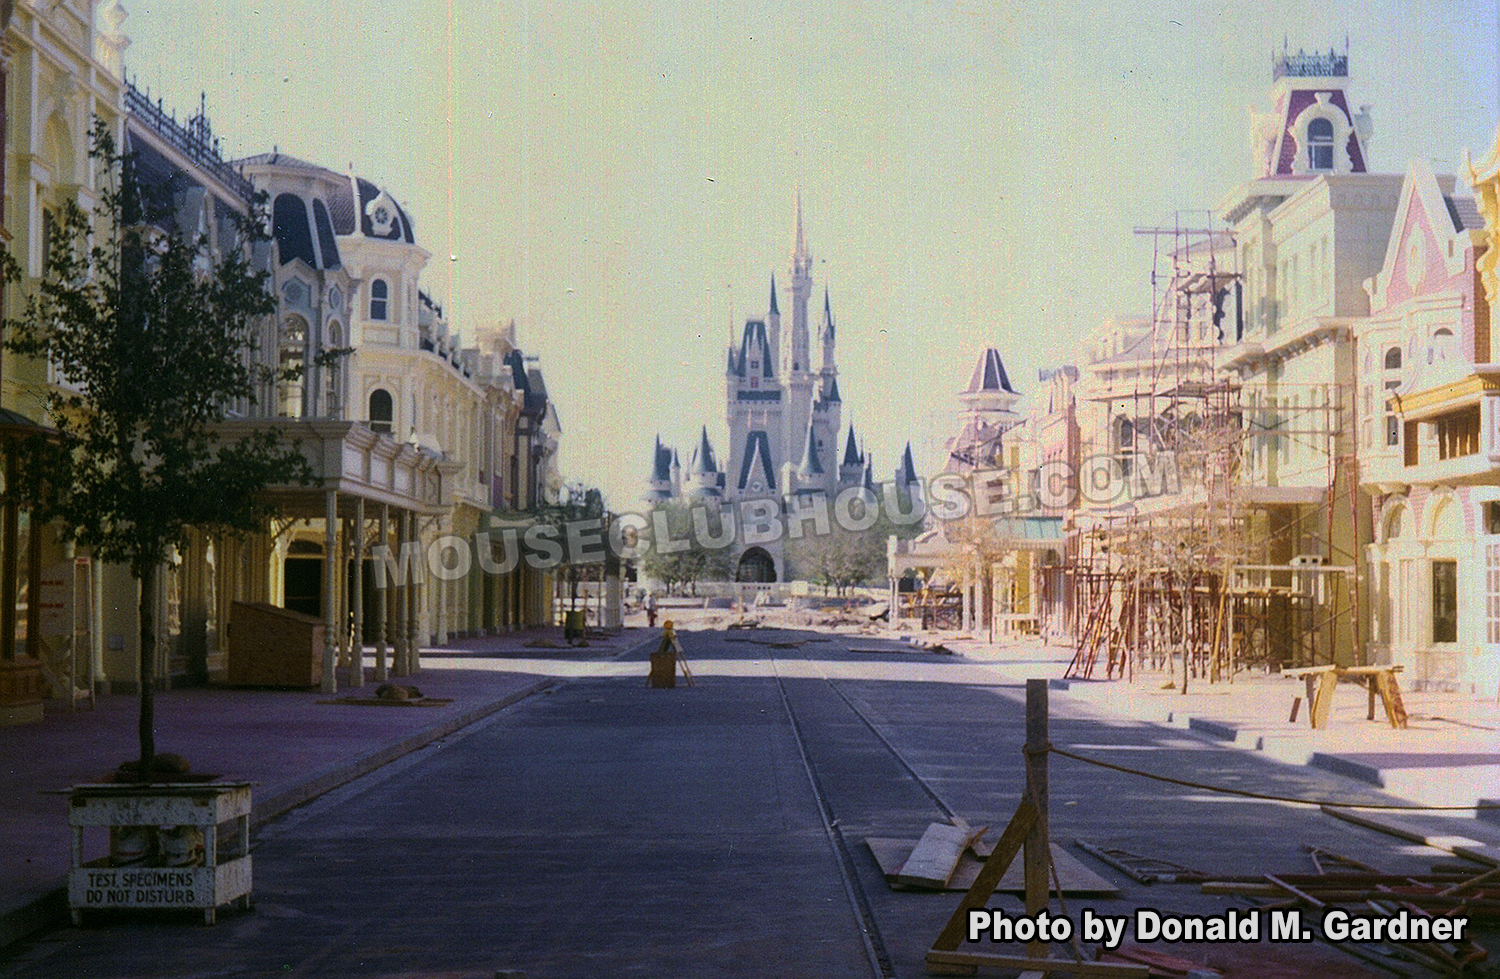 Construction of Main Street in the Magic Kingdom in Walt Disney World, photo taken by Disney Imagineer Don Gardner